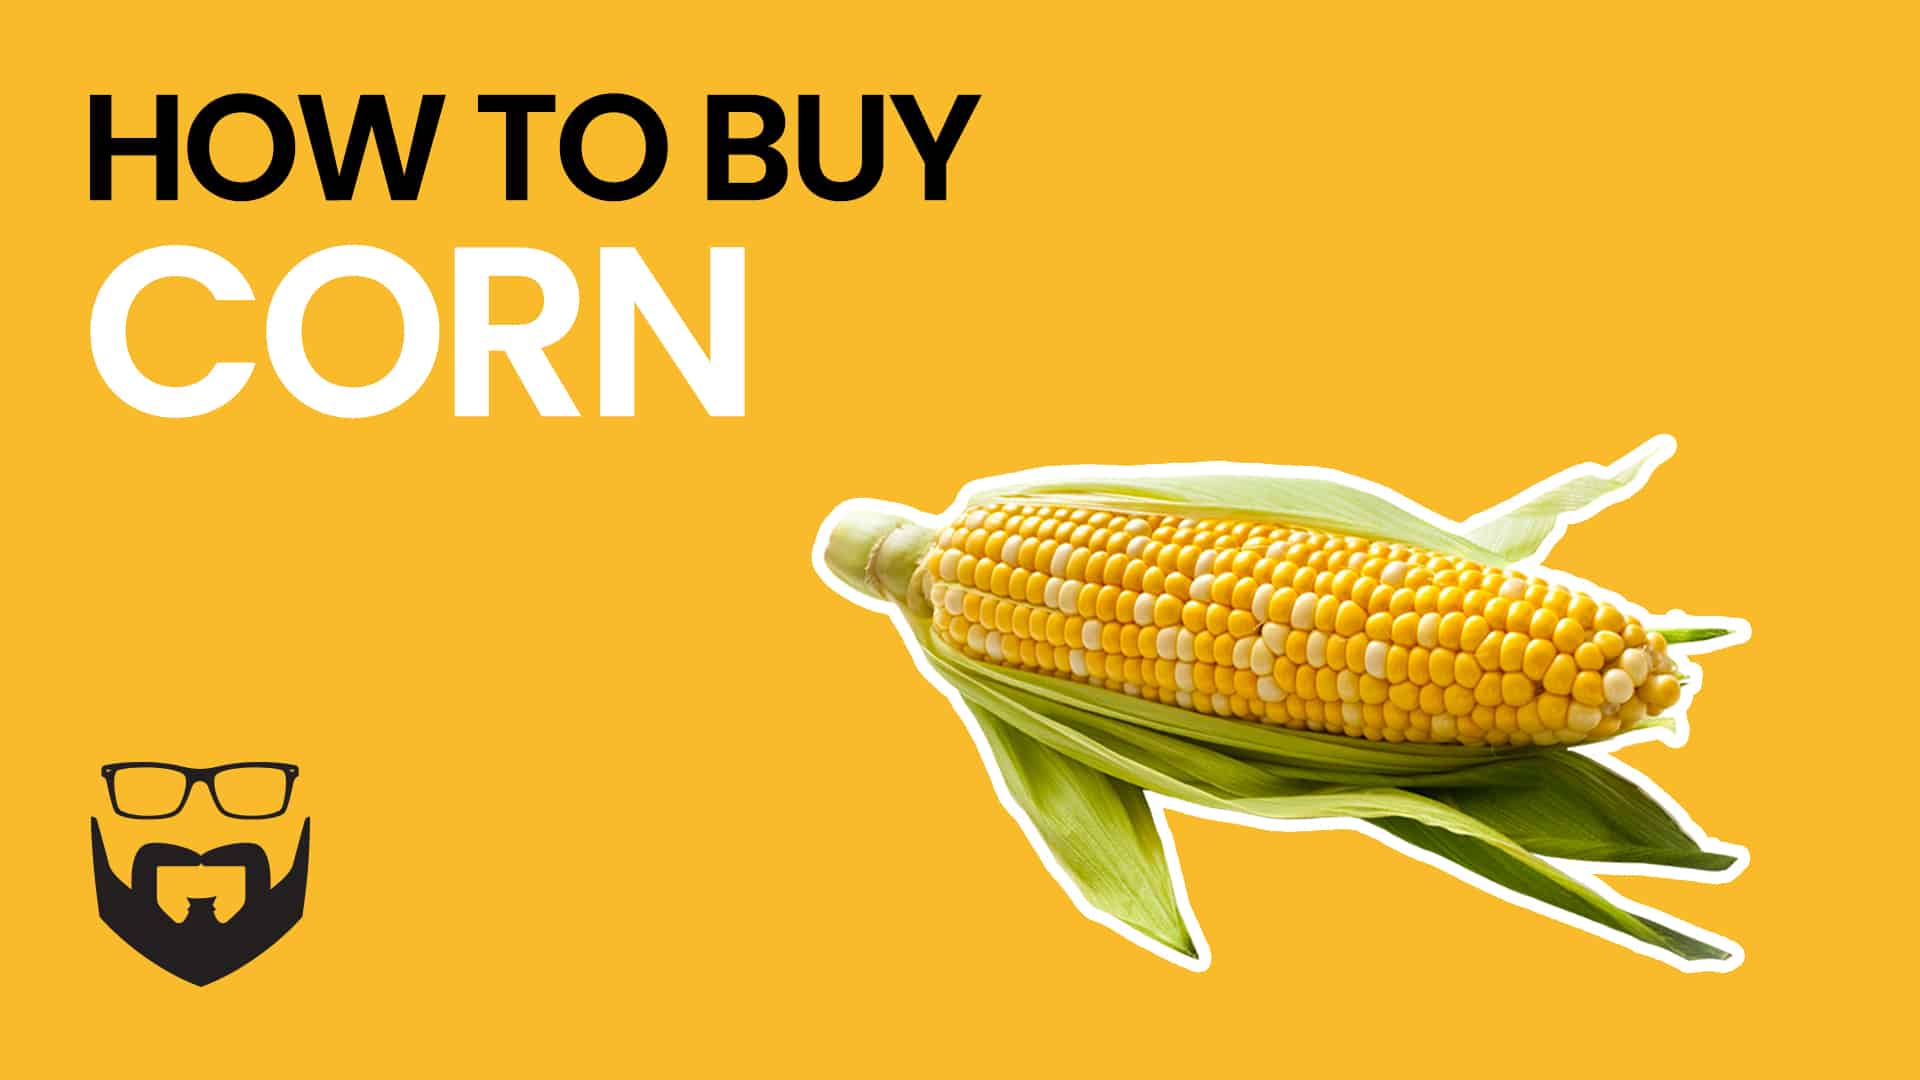 How to Buy Corn Video - Yellow